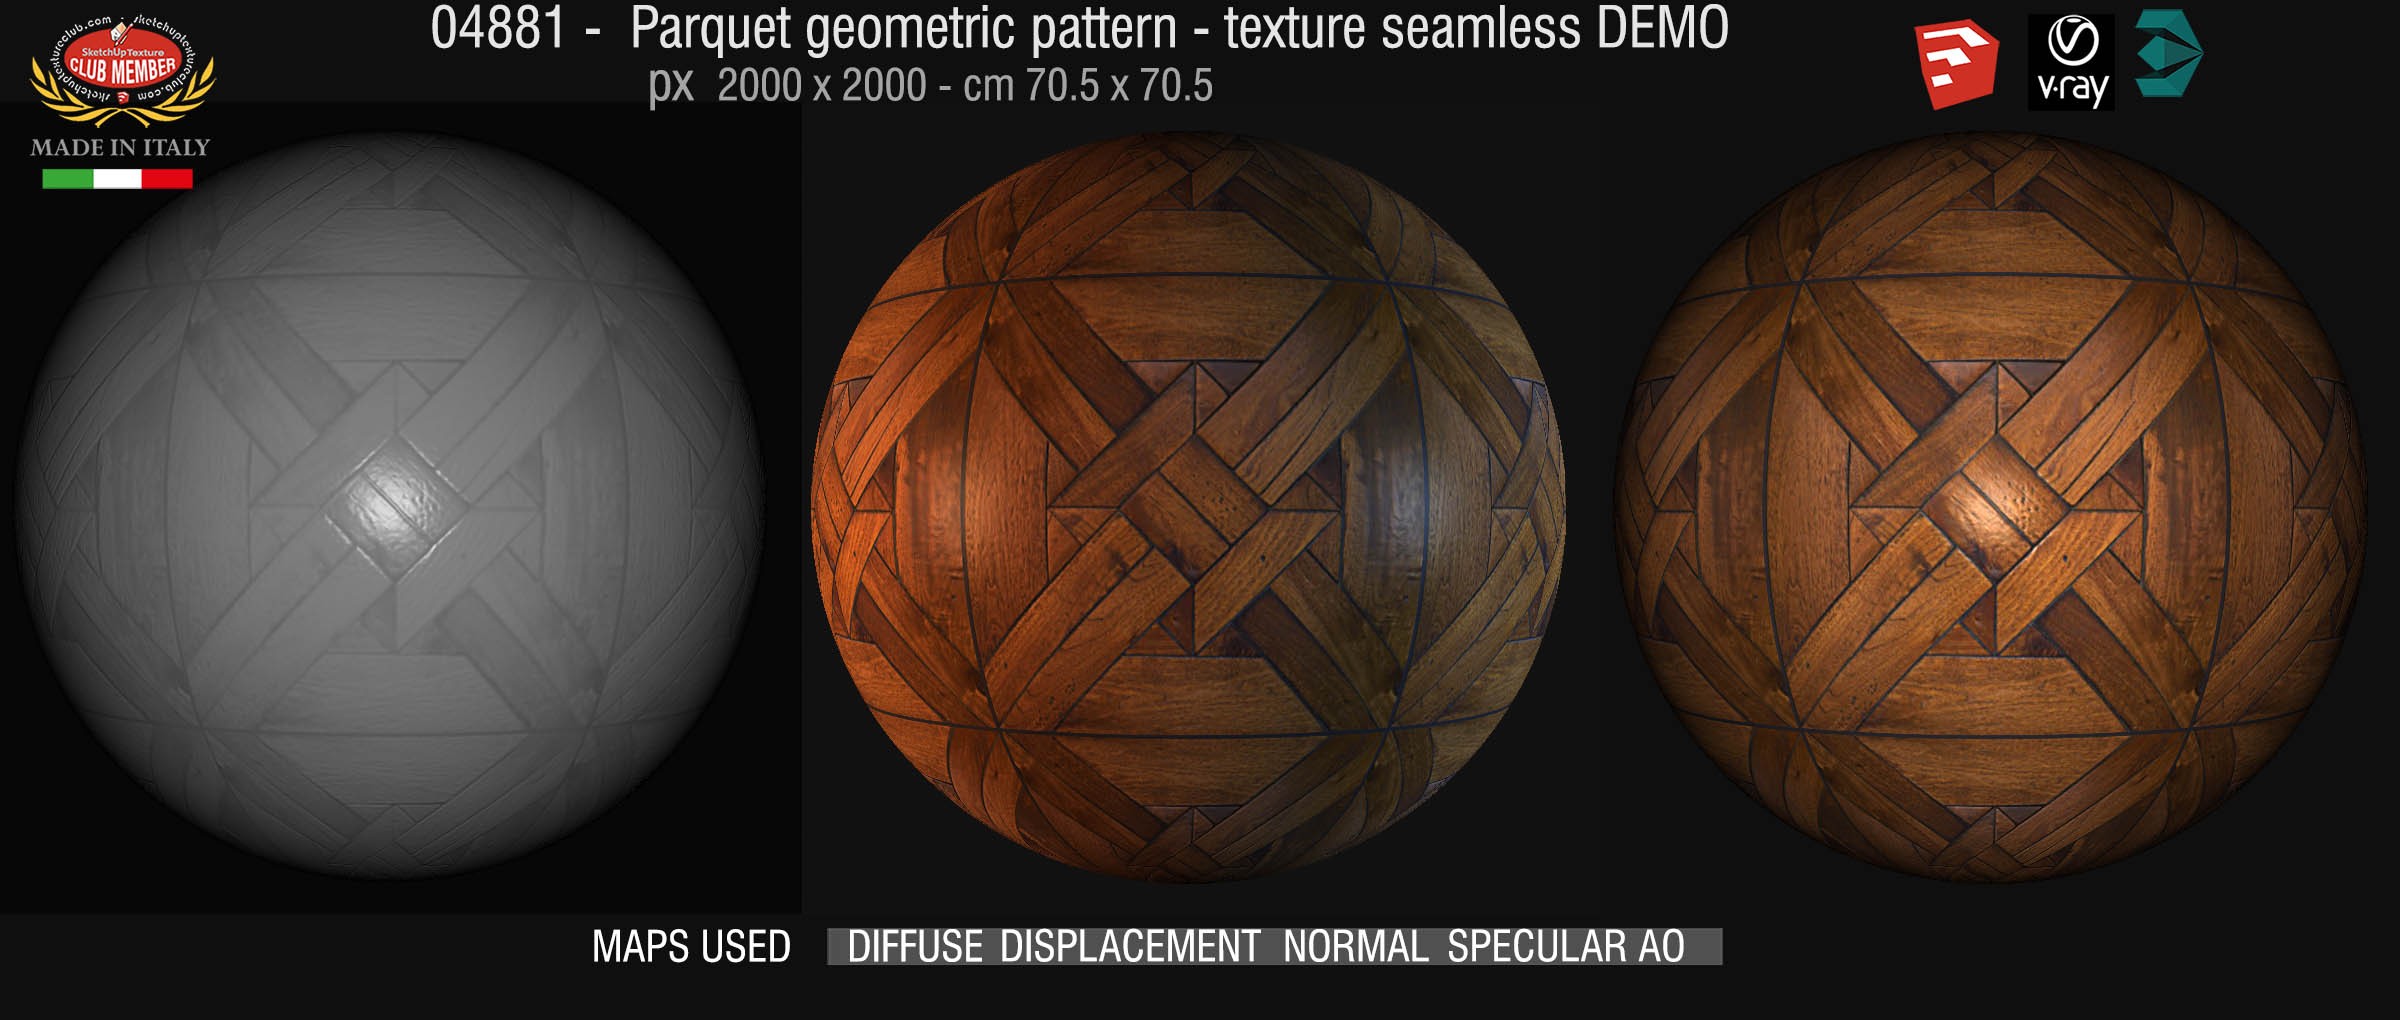 04881 Parquet geometric pattern texture seamless + maps DEMO